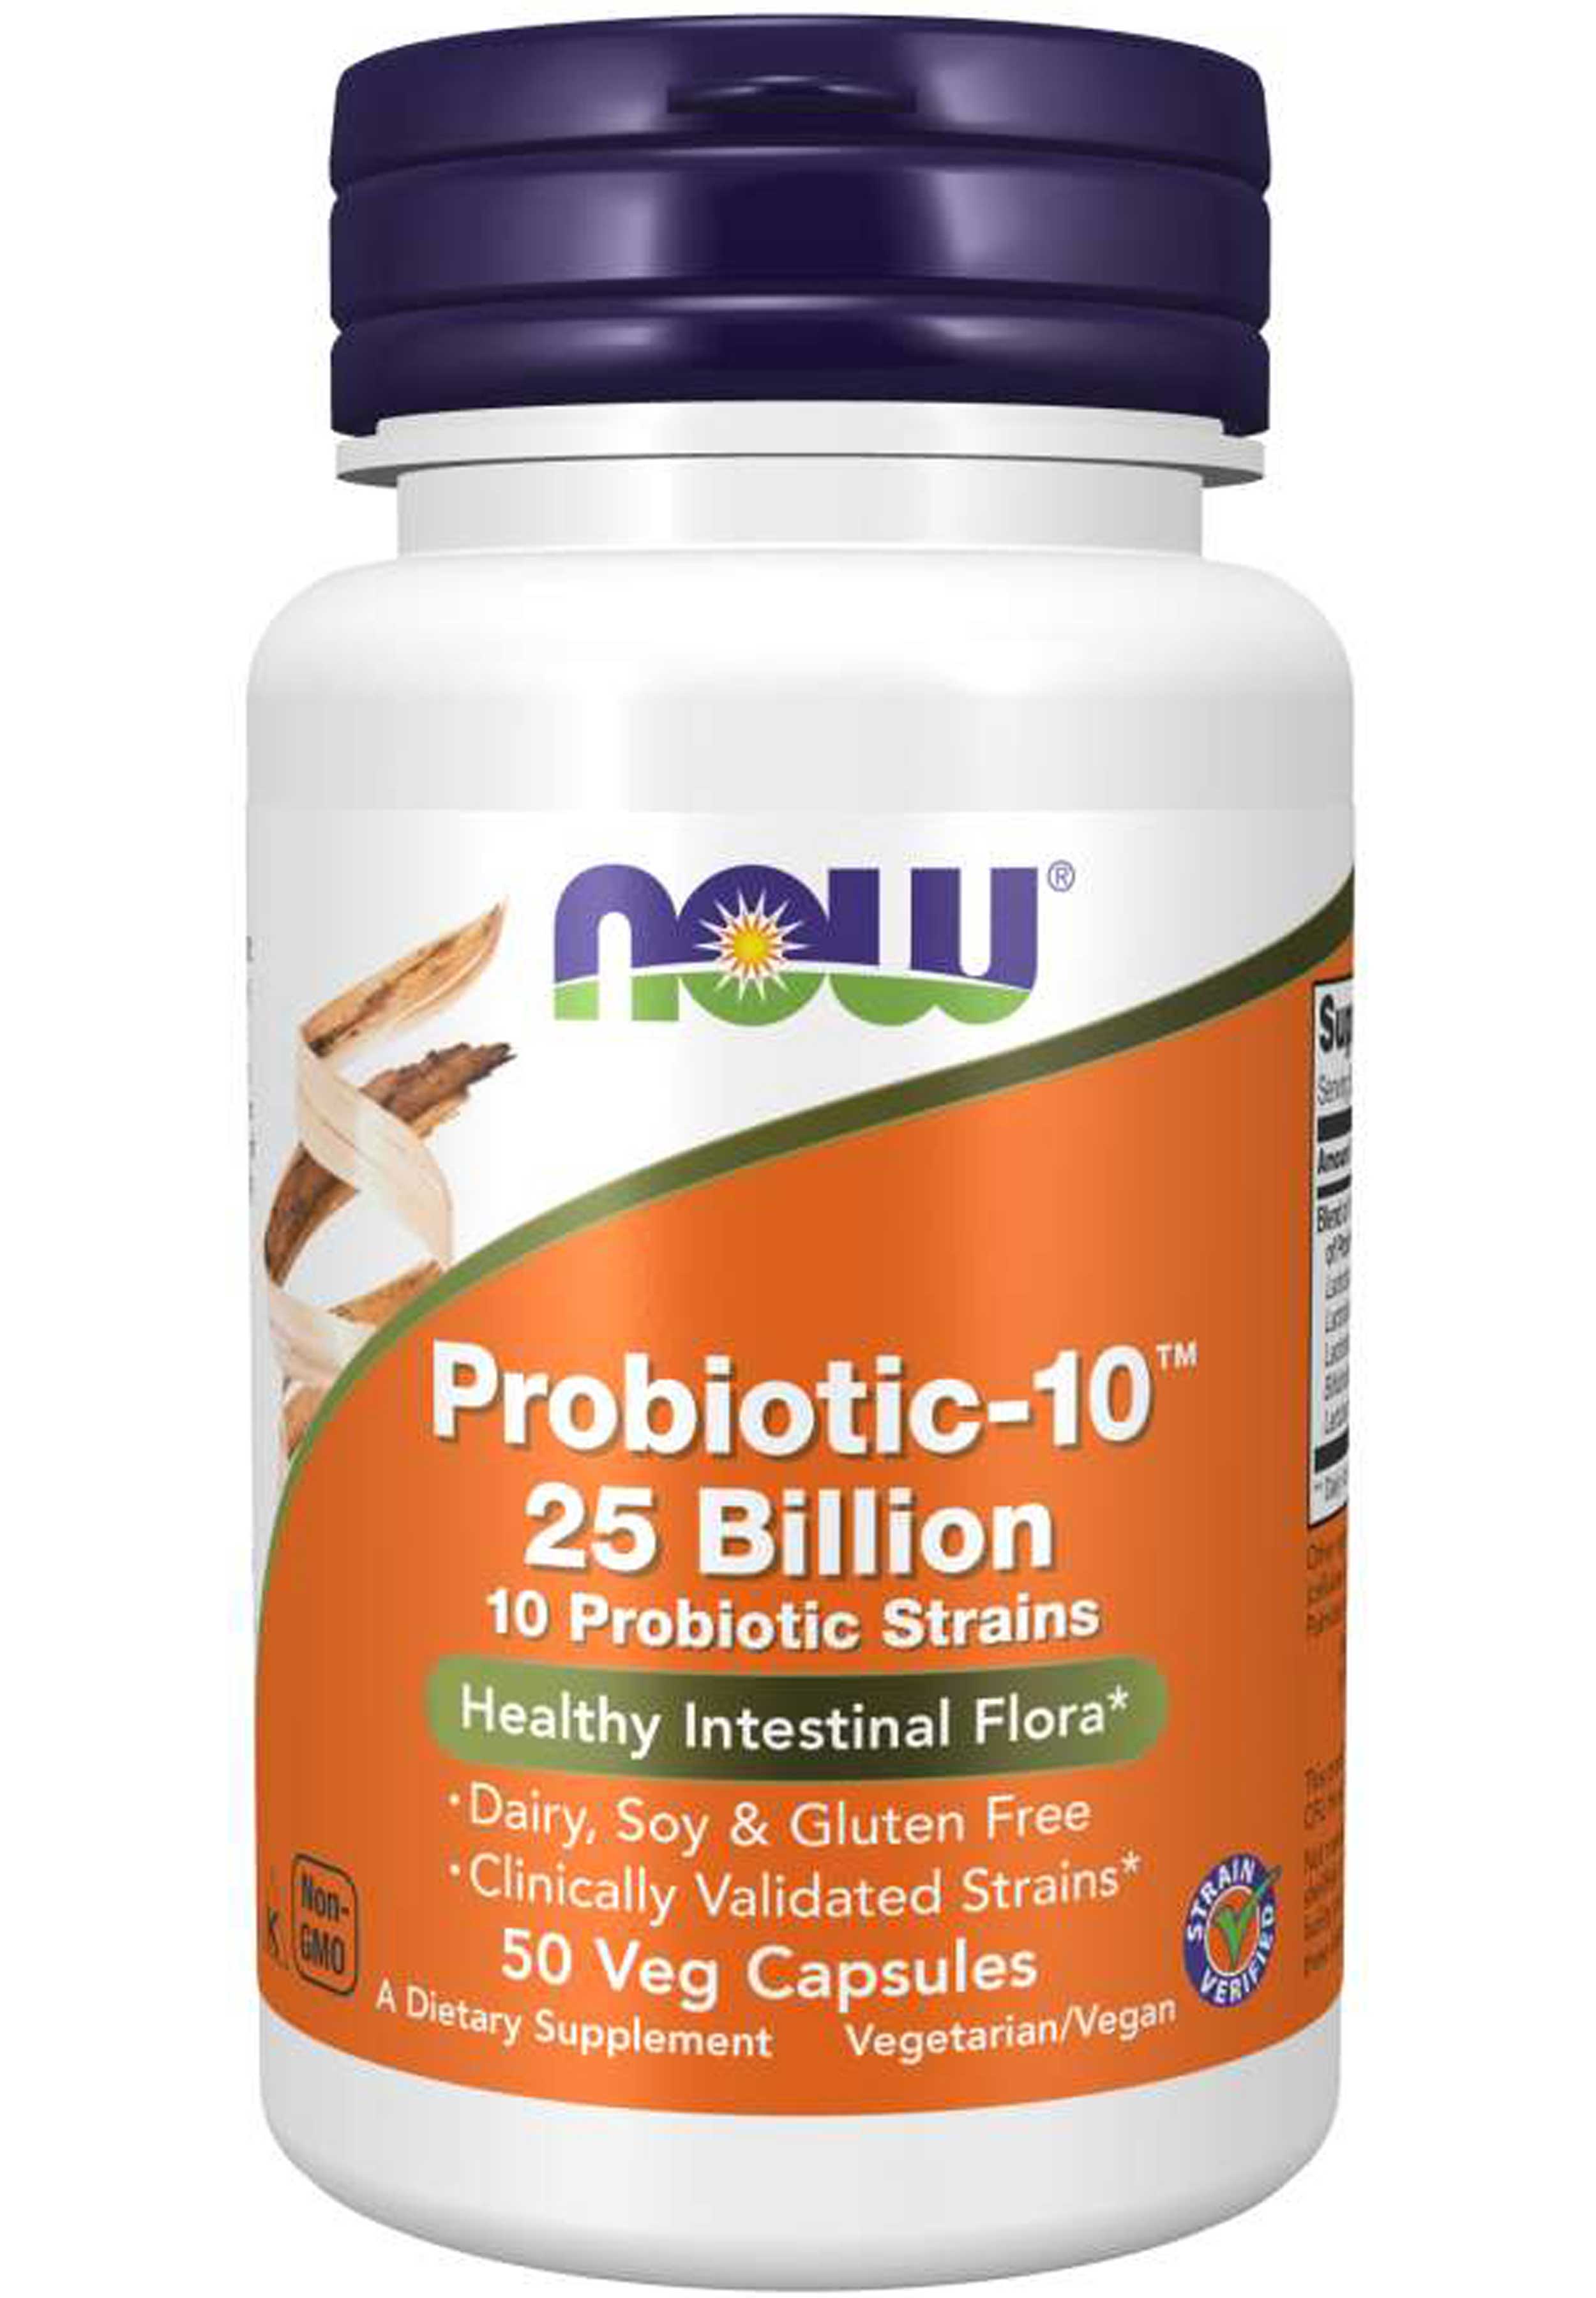 NOW Probiotic-10 25 Billion